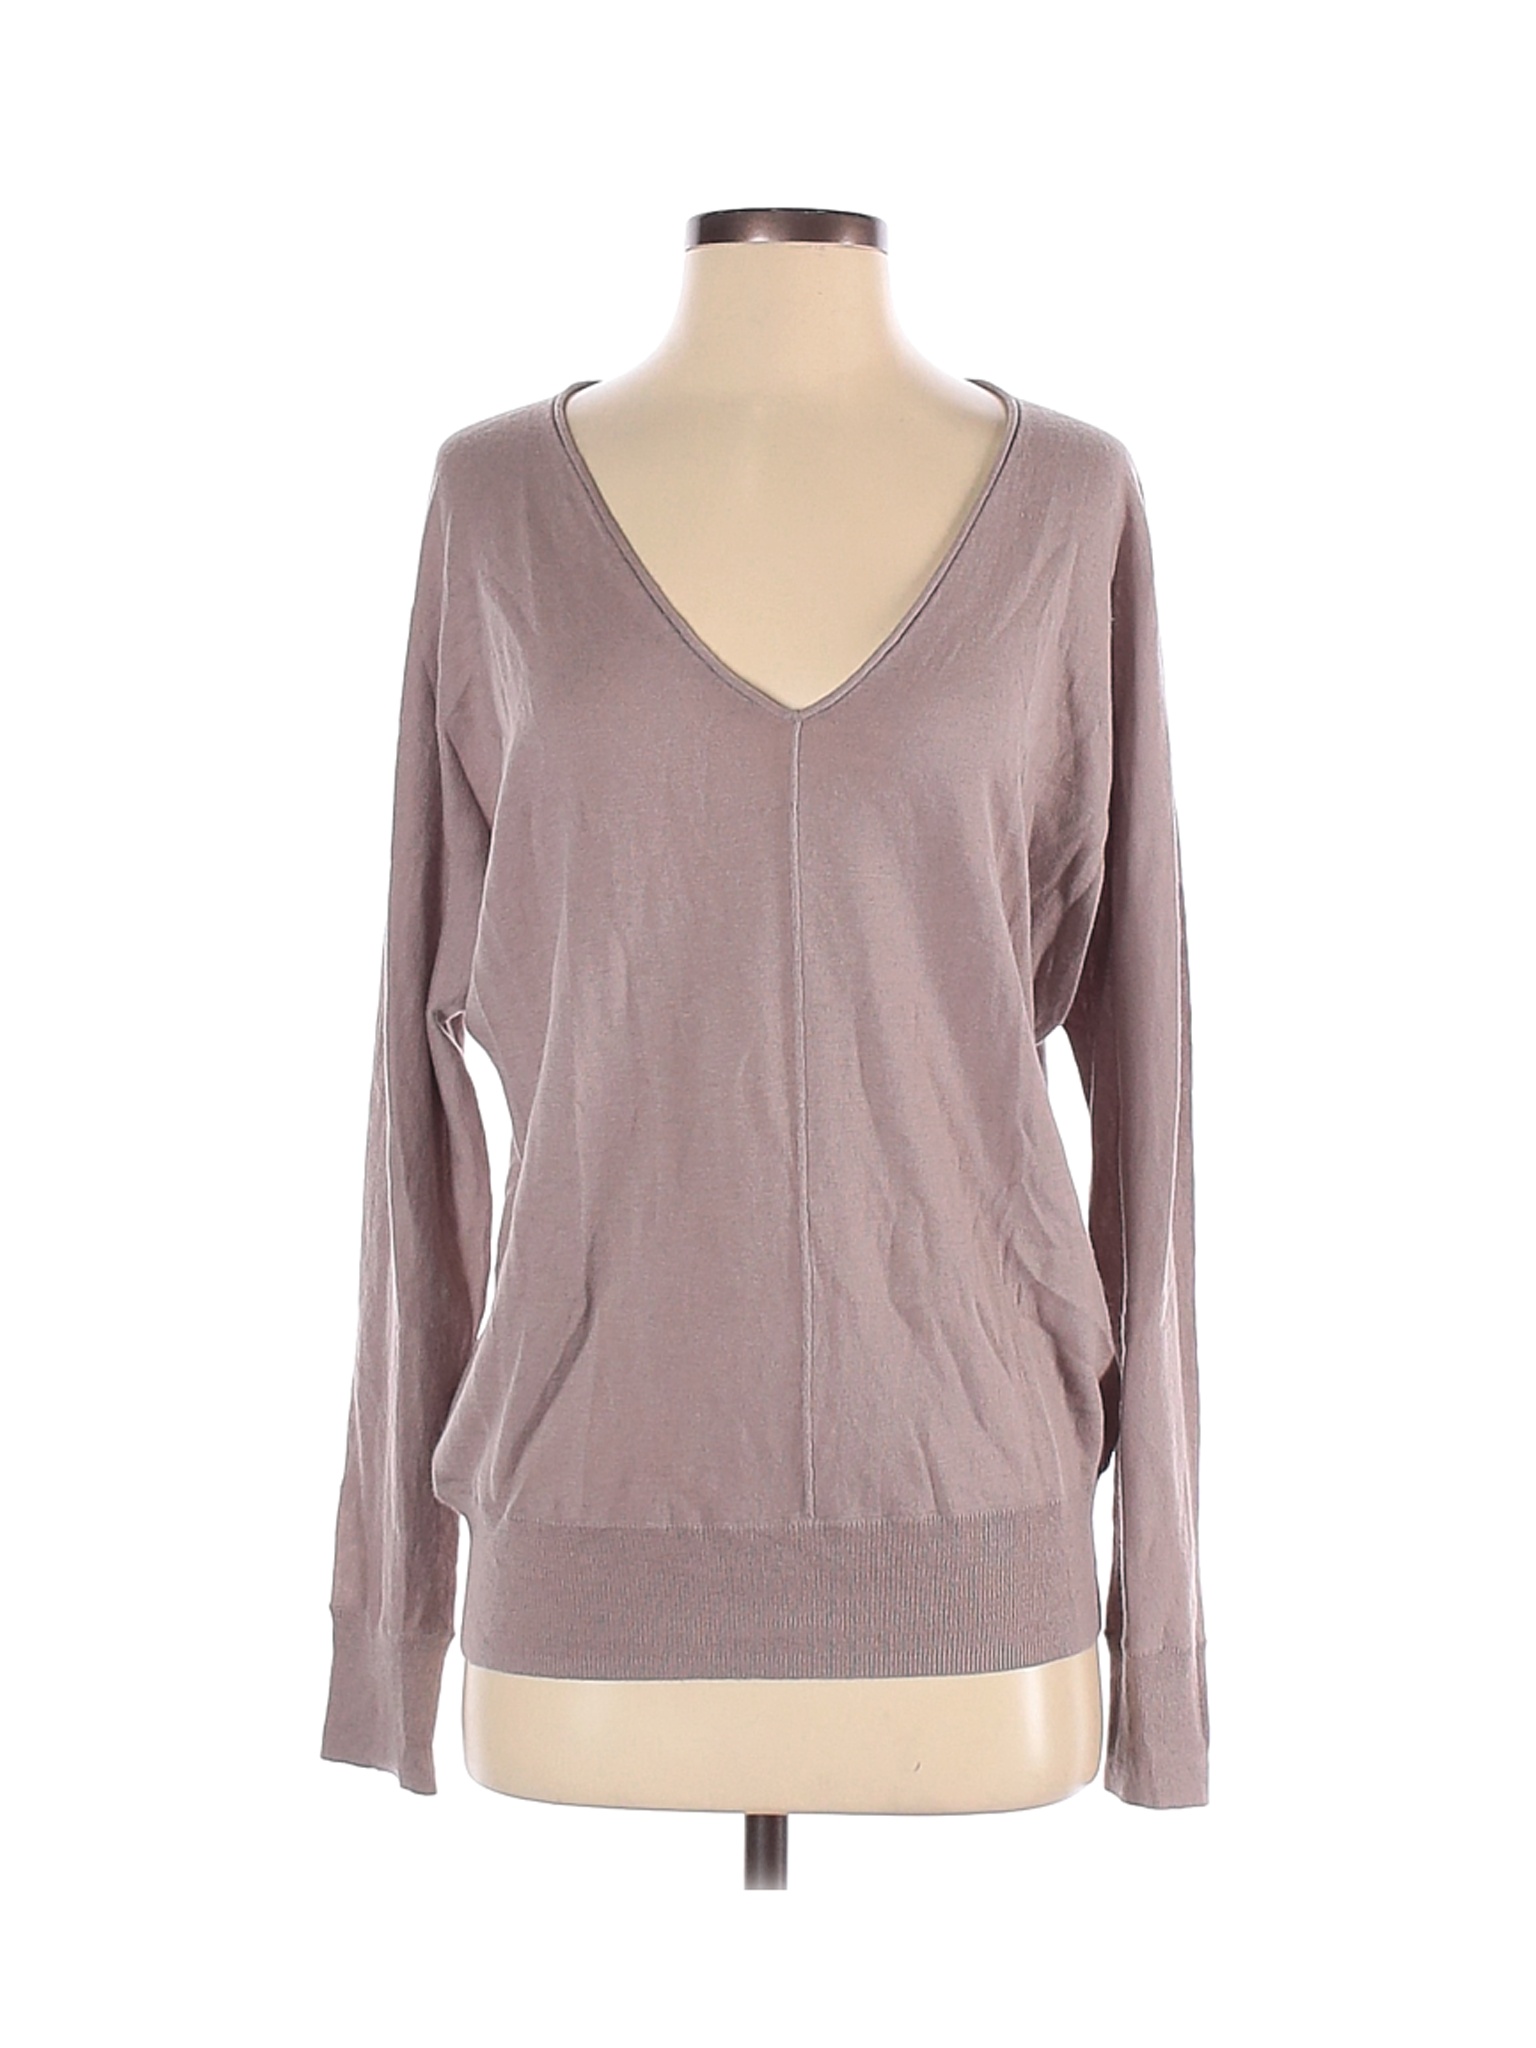 Gap Women Brown Pullover Sweater S | eBay